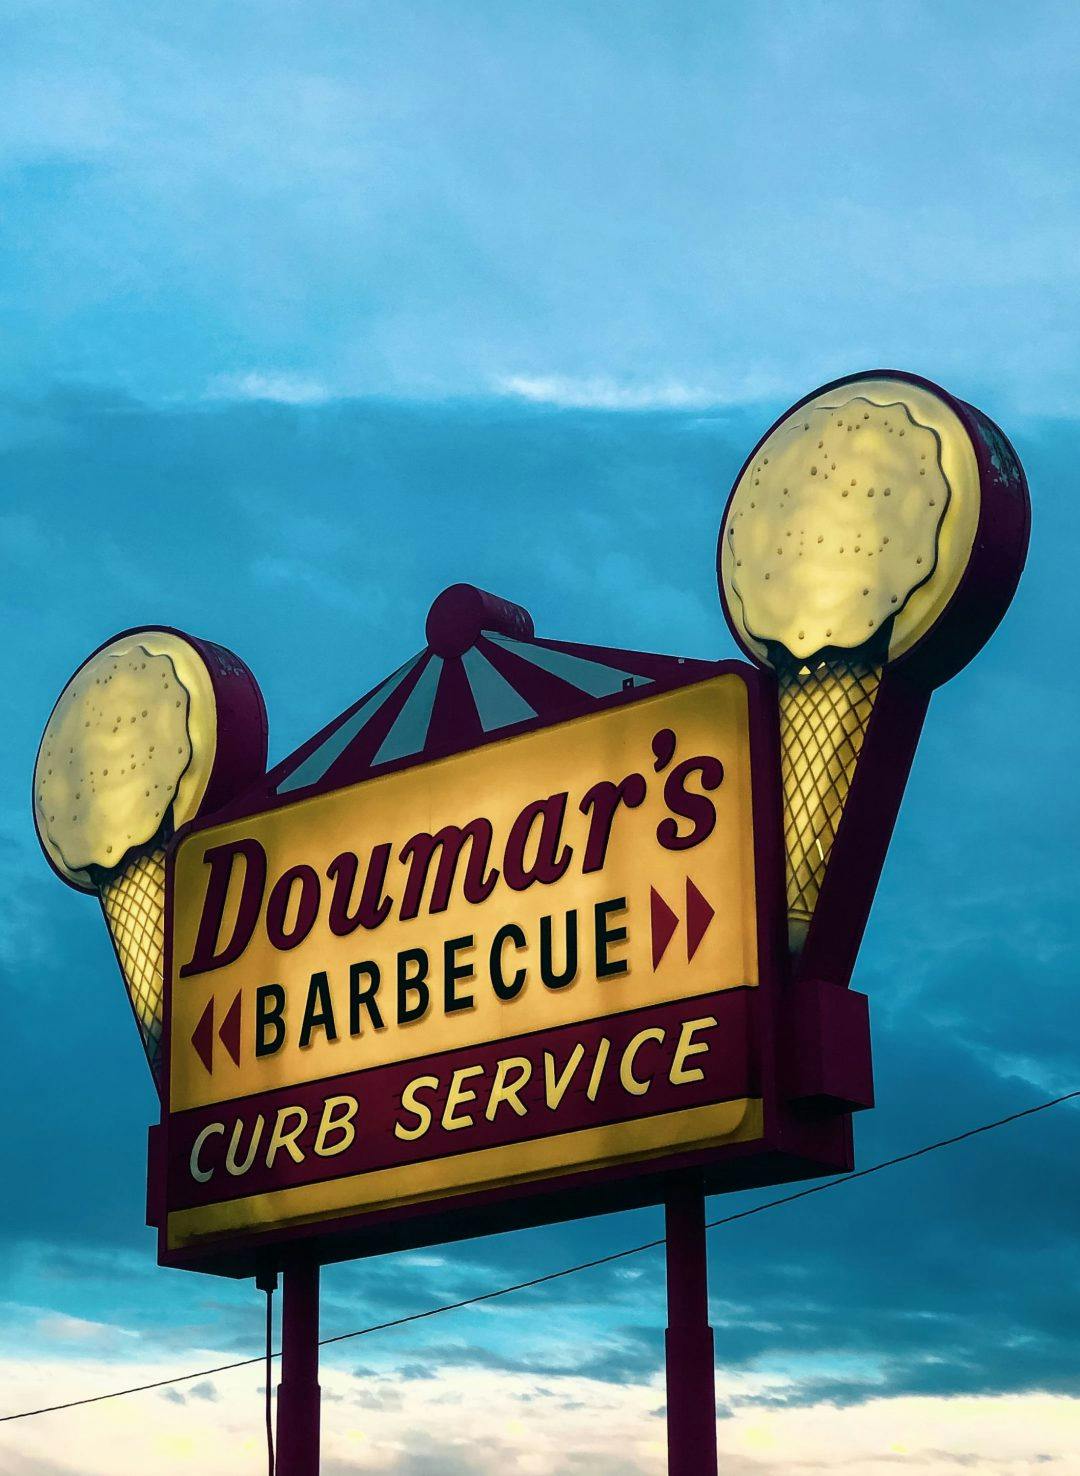 Dourmar's barbecue sign in Norfolk VA